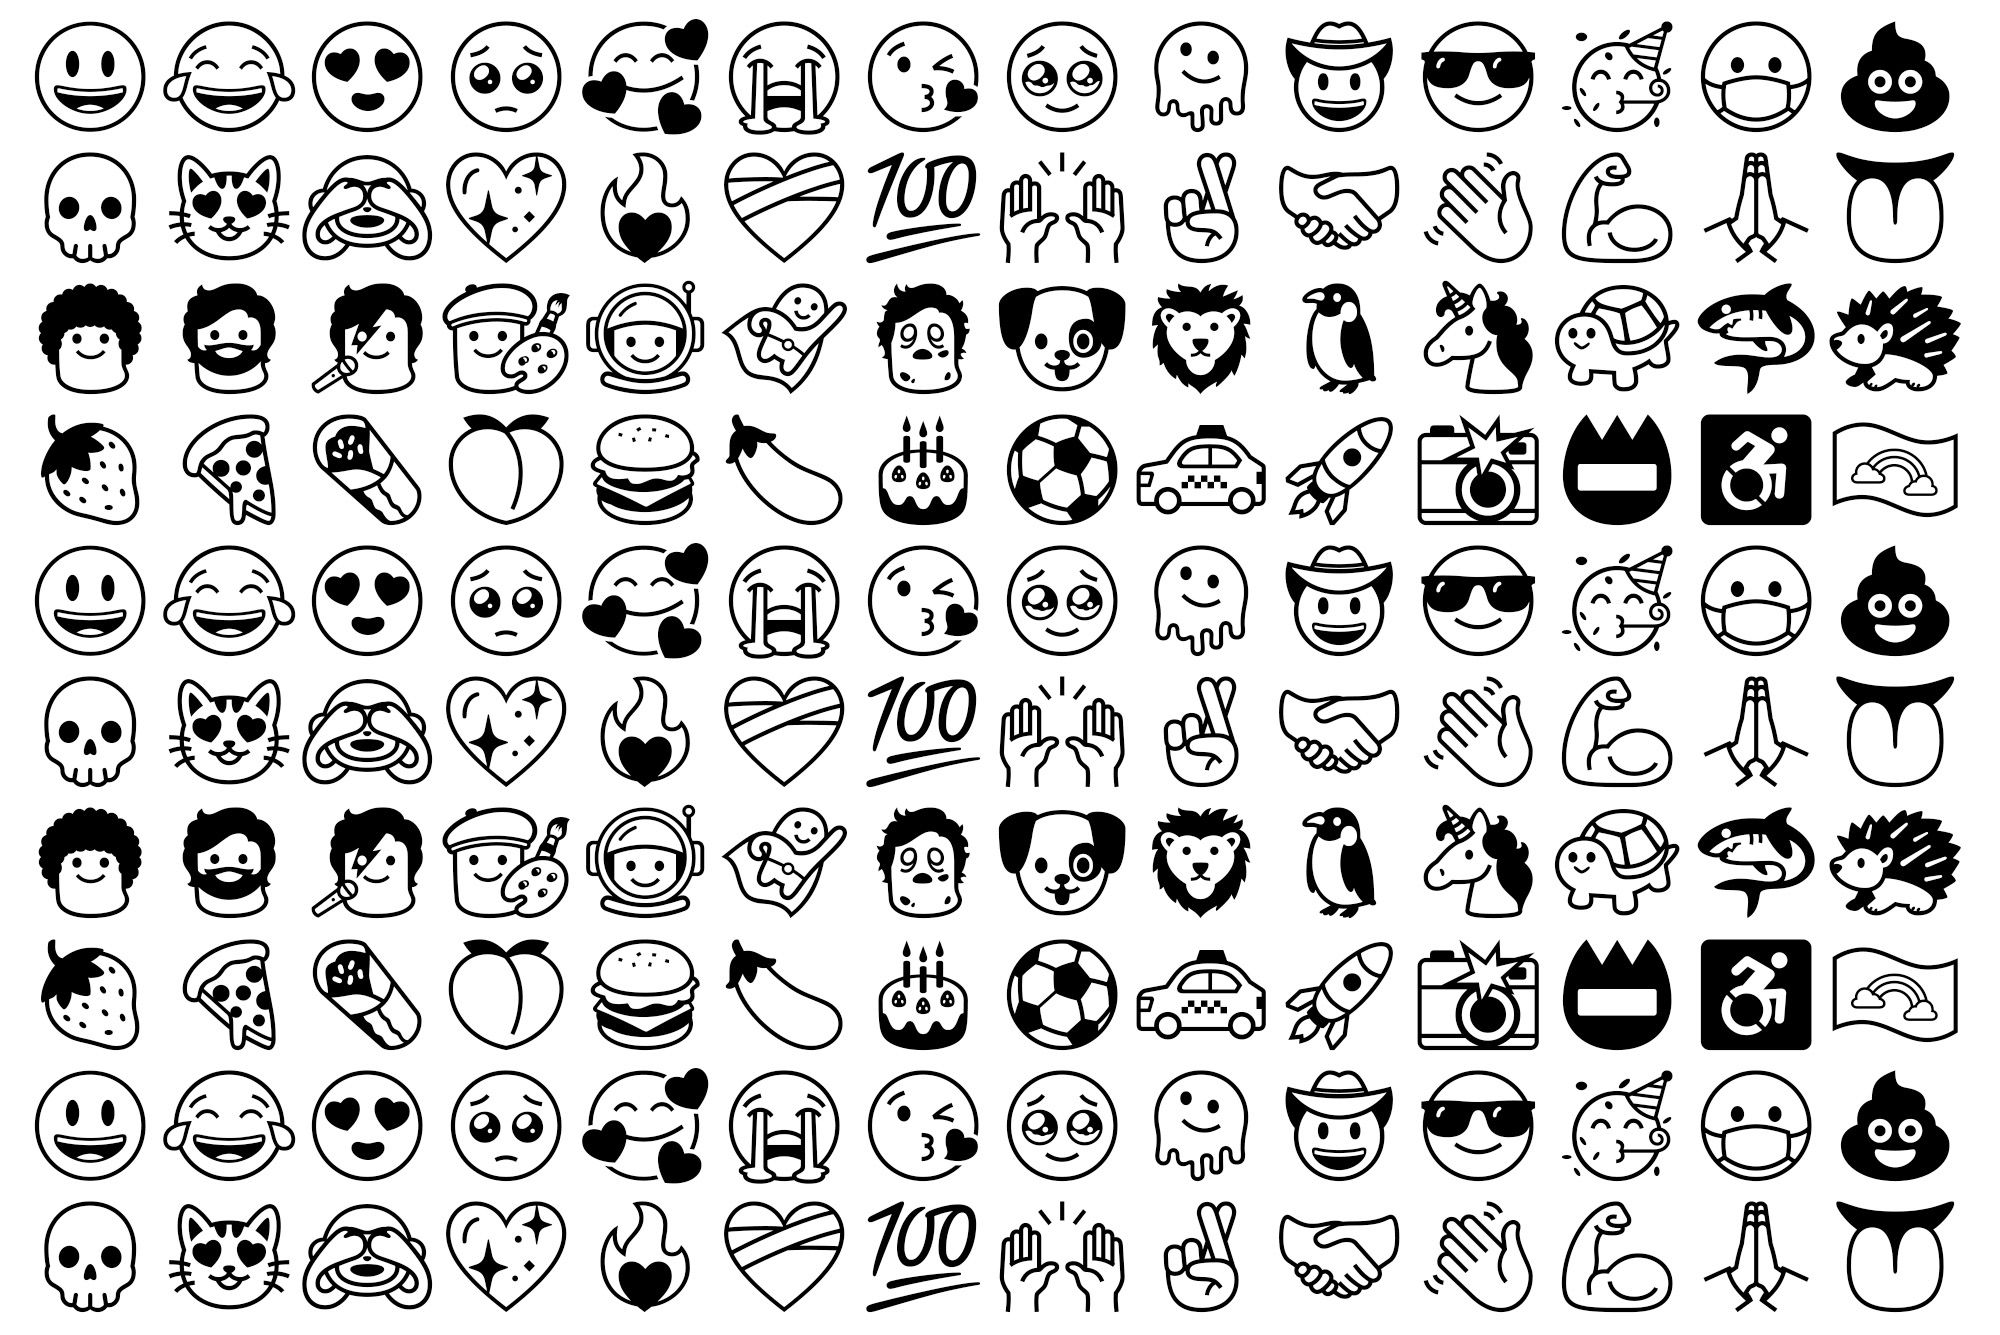 Emojis copy paste black and white